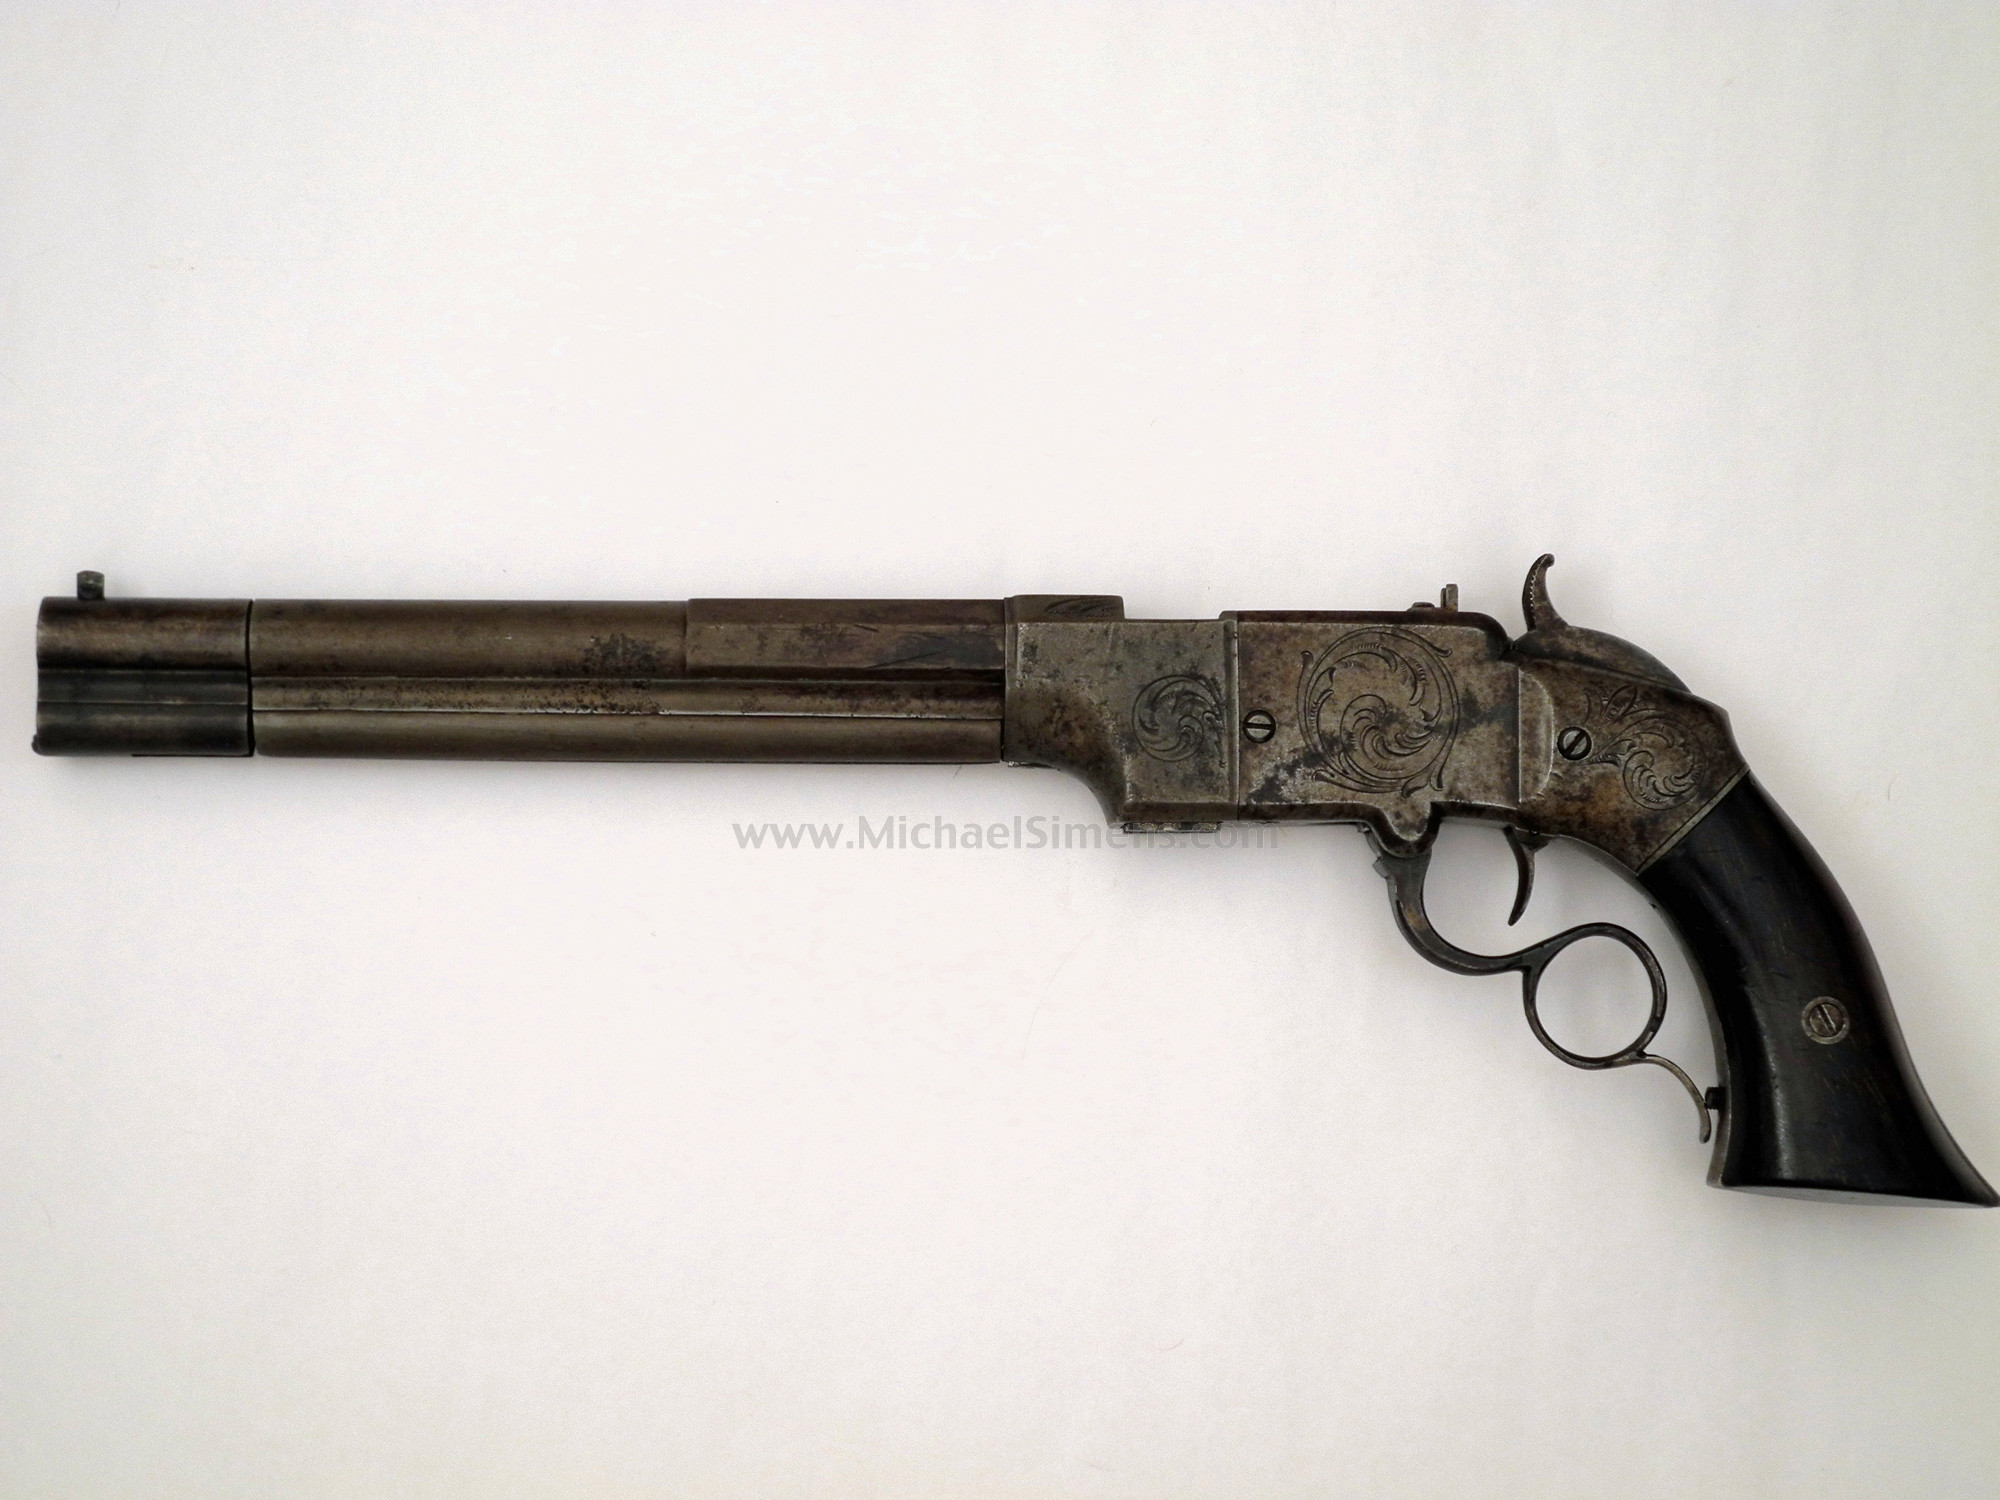 Smith & Wesson Volcanic Pistol